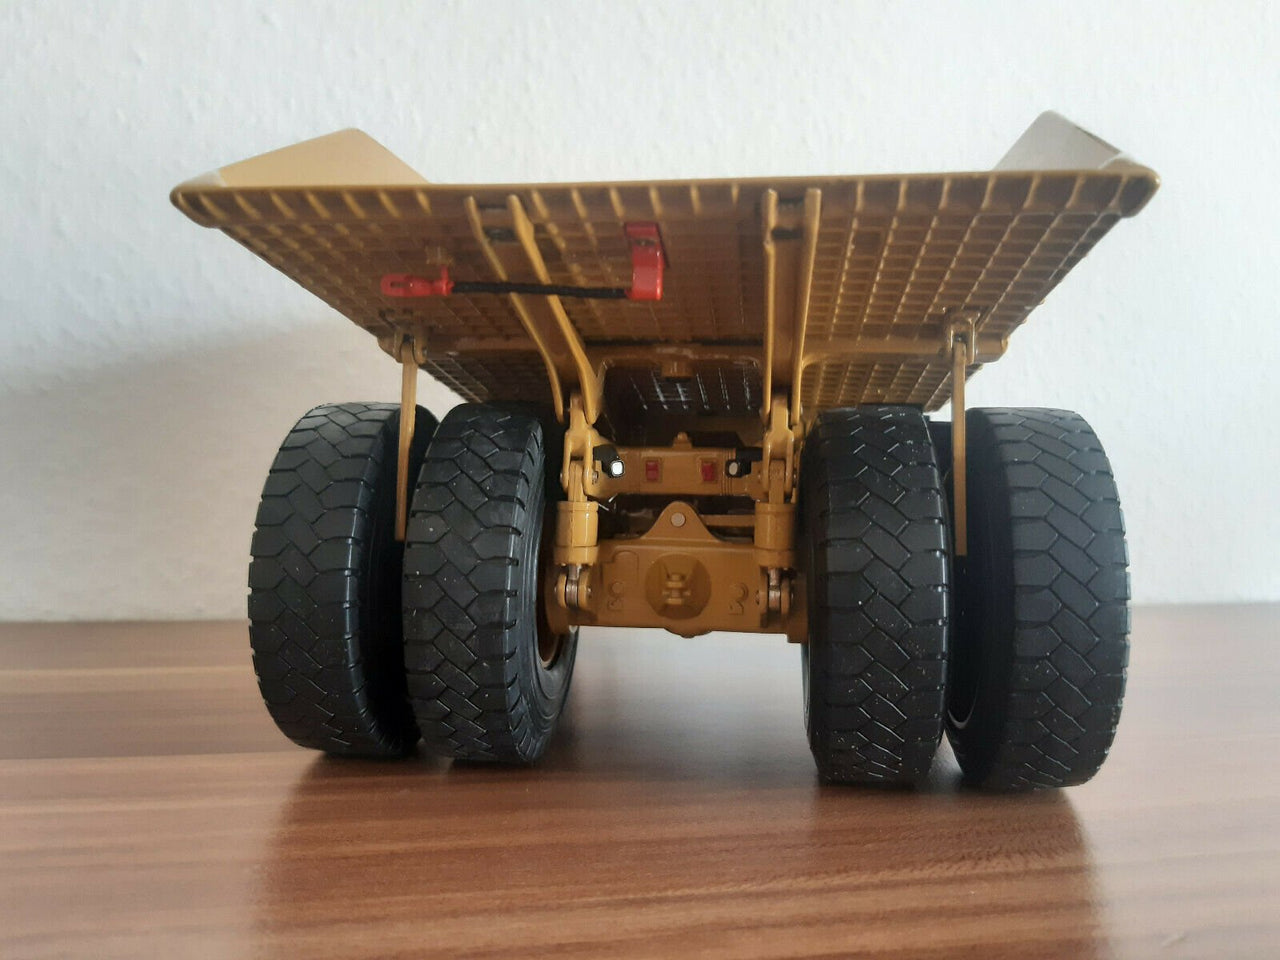 55151 Caterpillar 793D Mining Truck 1:50 Scale (Discontinued Model)